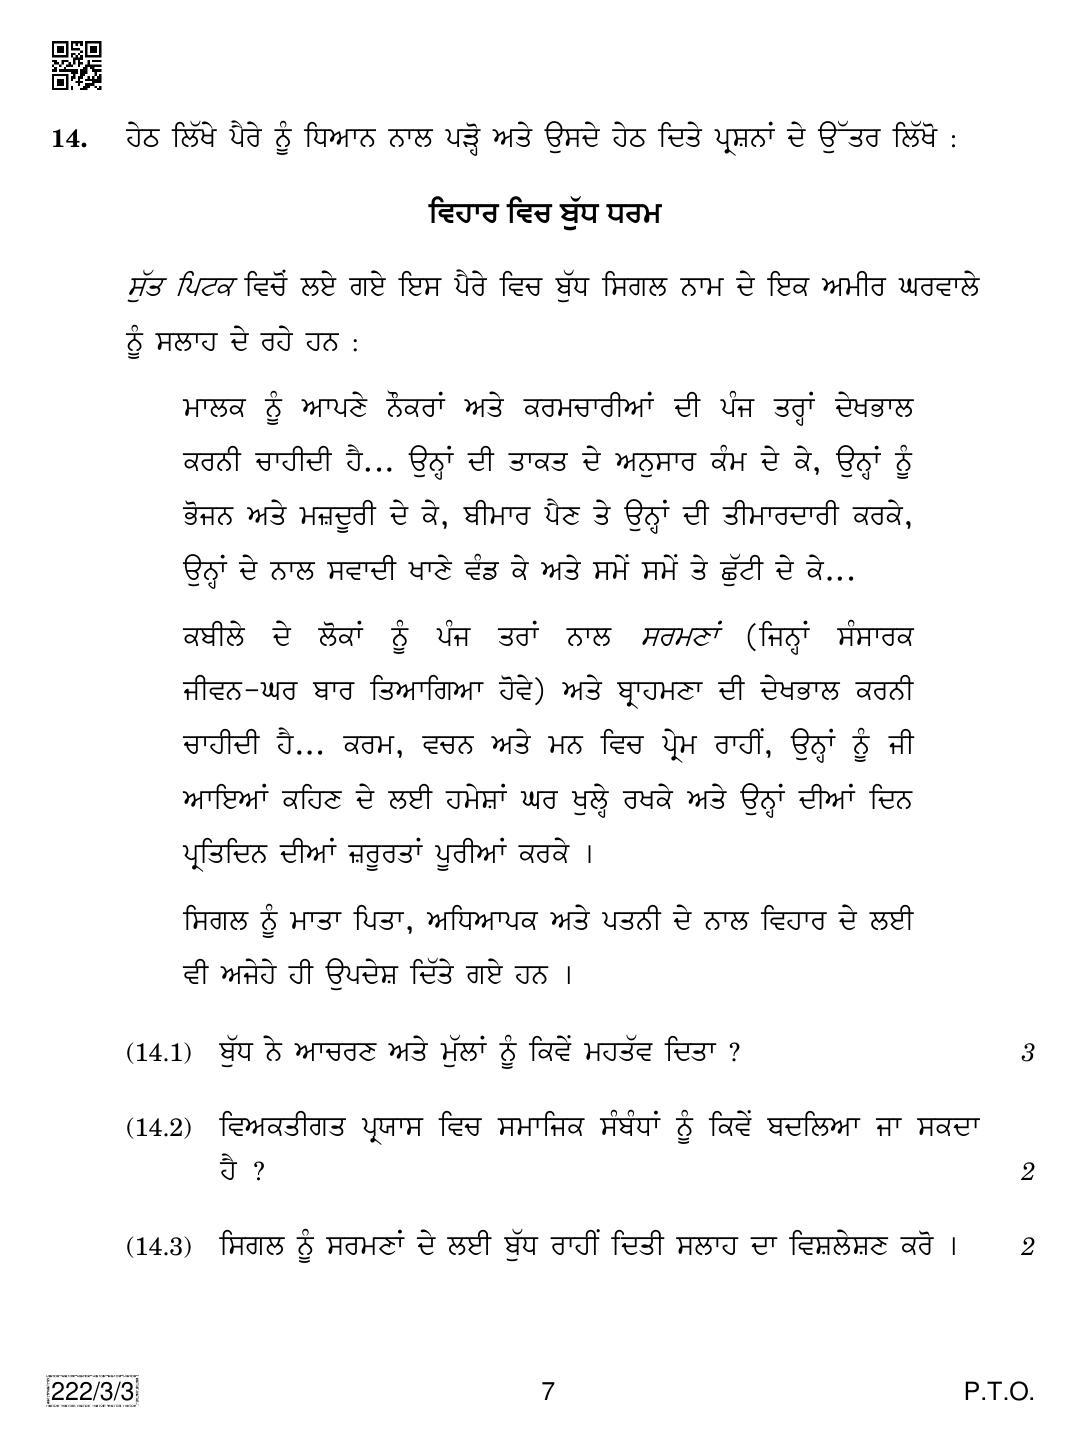 CBSE Class 12 222-3-3 Hiastory (Punjabi) 2019 Question Paper - Page 7